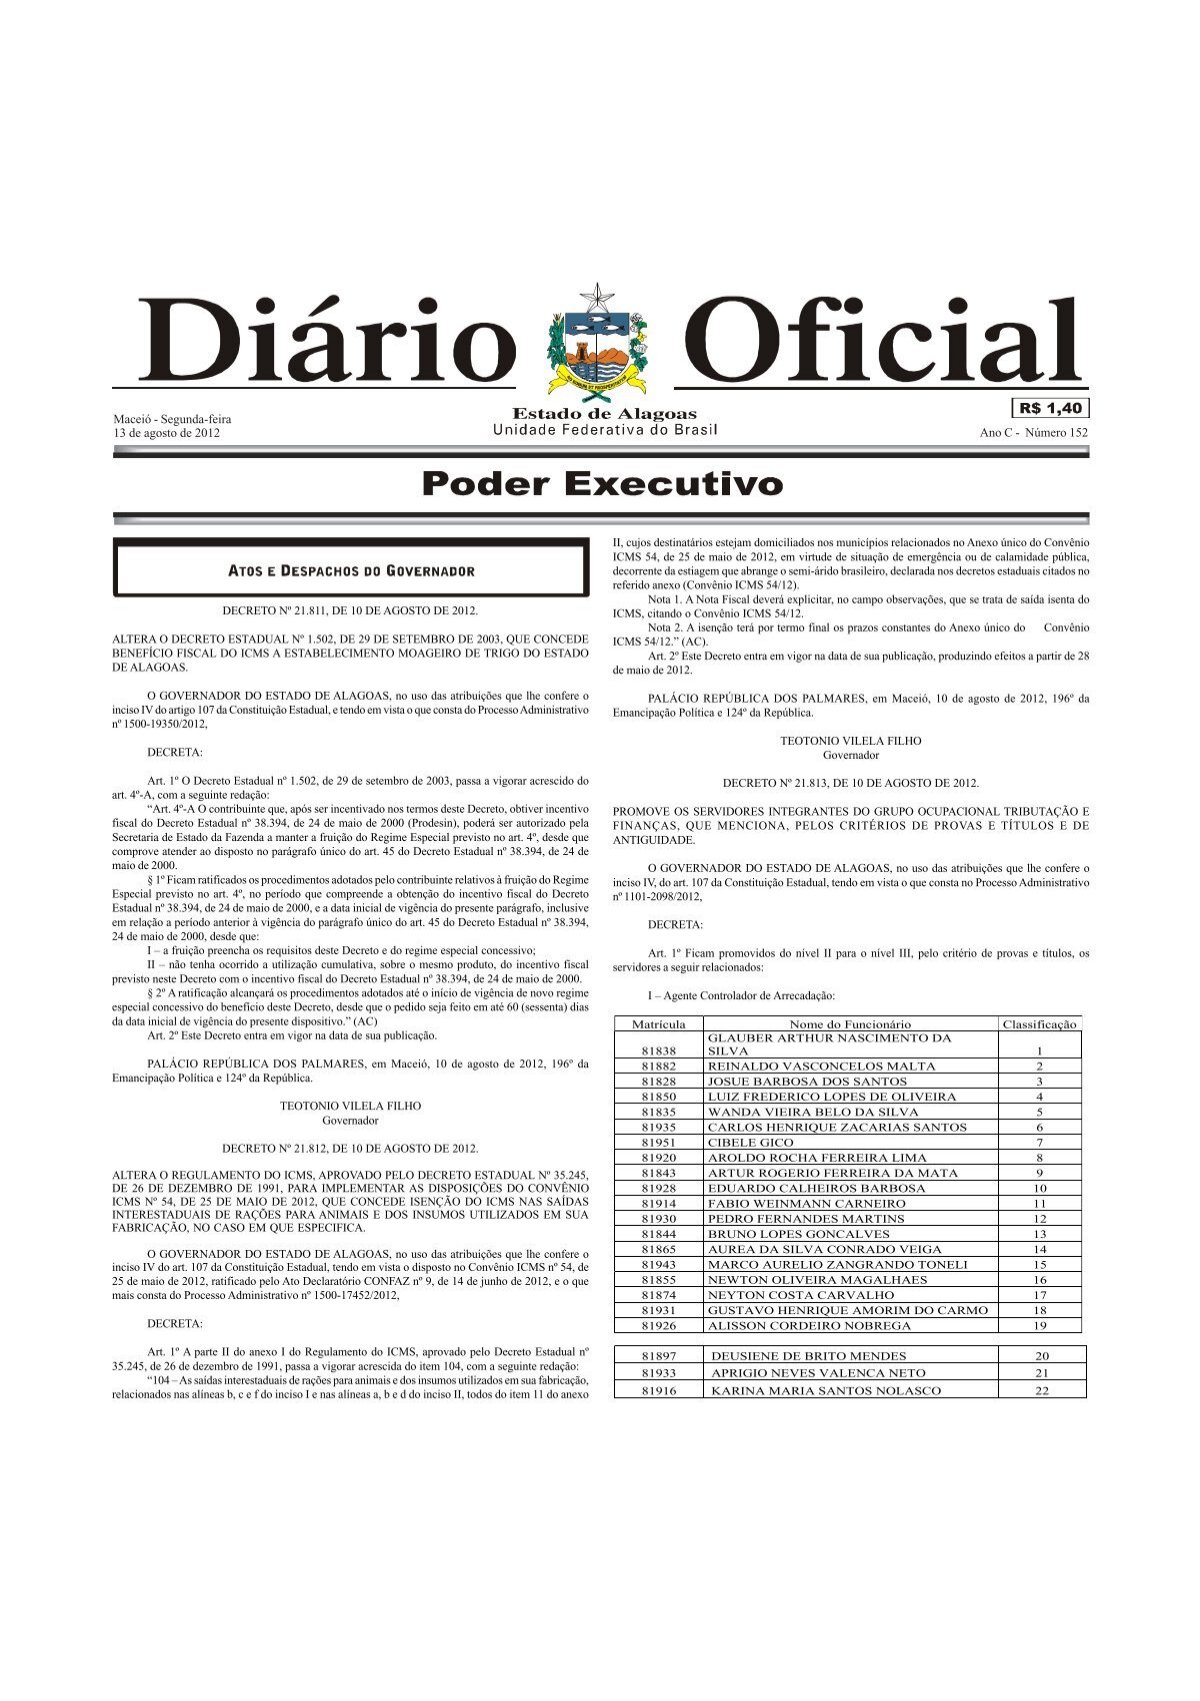 01 Poder Executivo.pdf - Imprensa Oficial - Graciliano Ramos